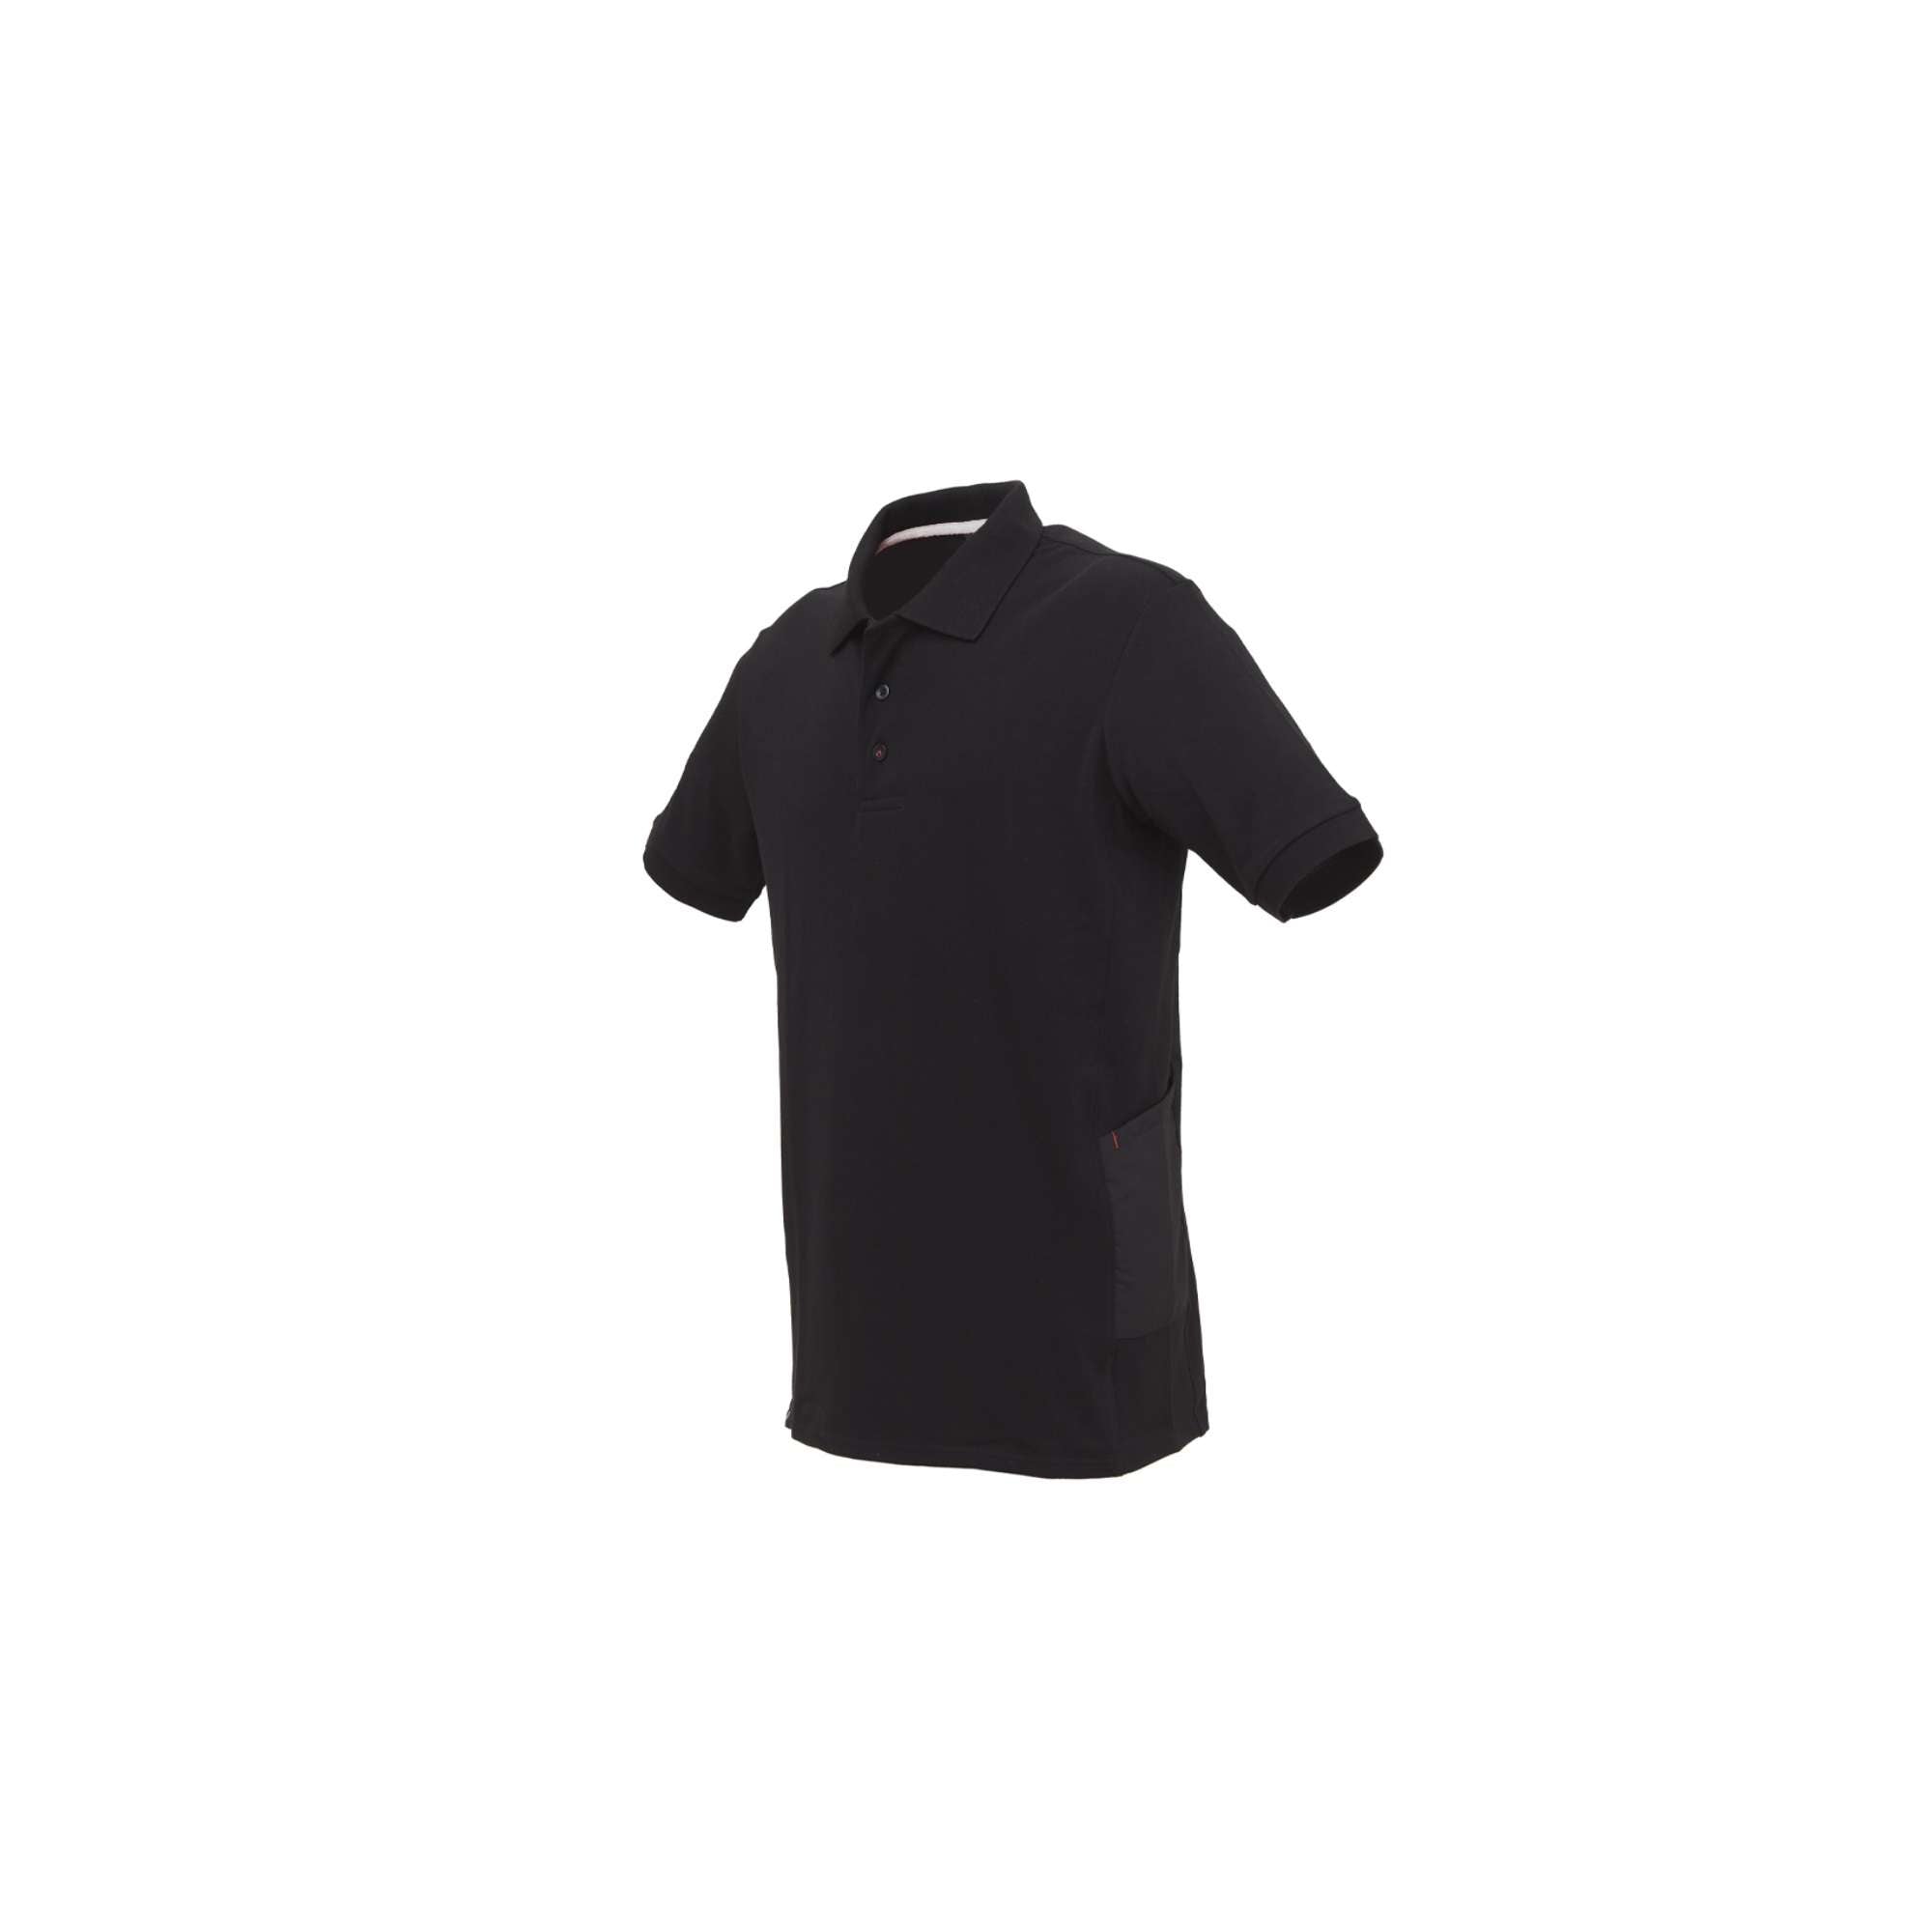 T-Shirt black carbon - U-Power EY138BC